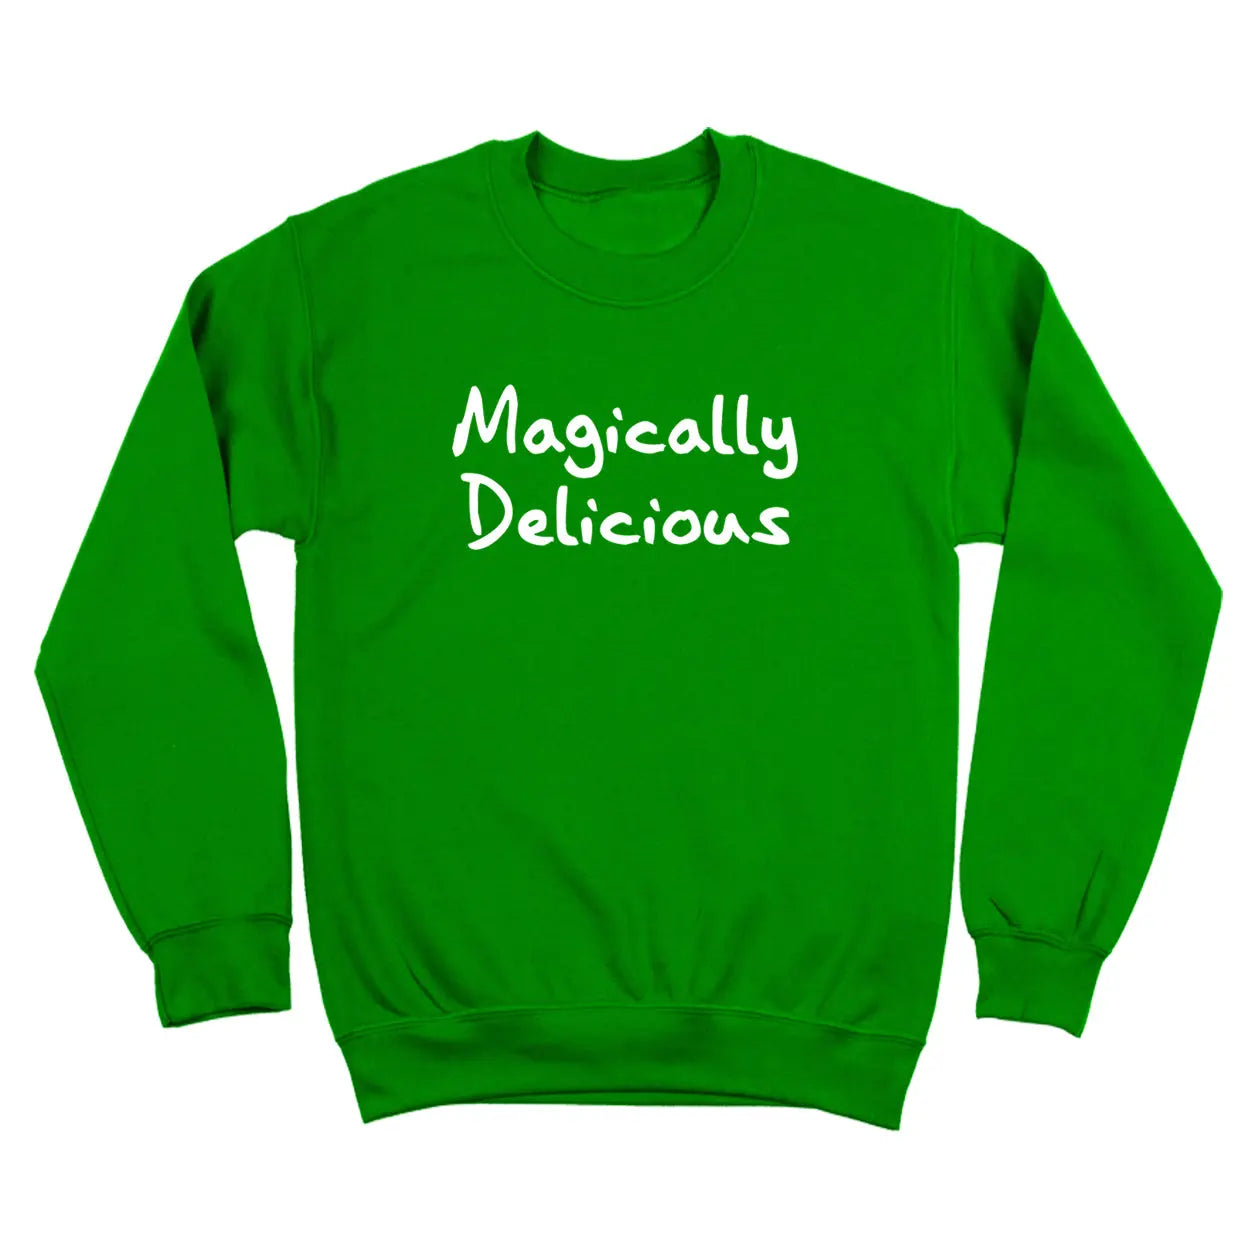 Magically Delicious Tshirt - Donkey Tees